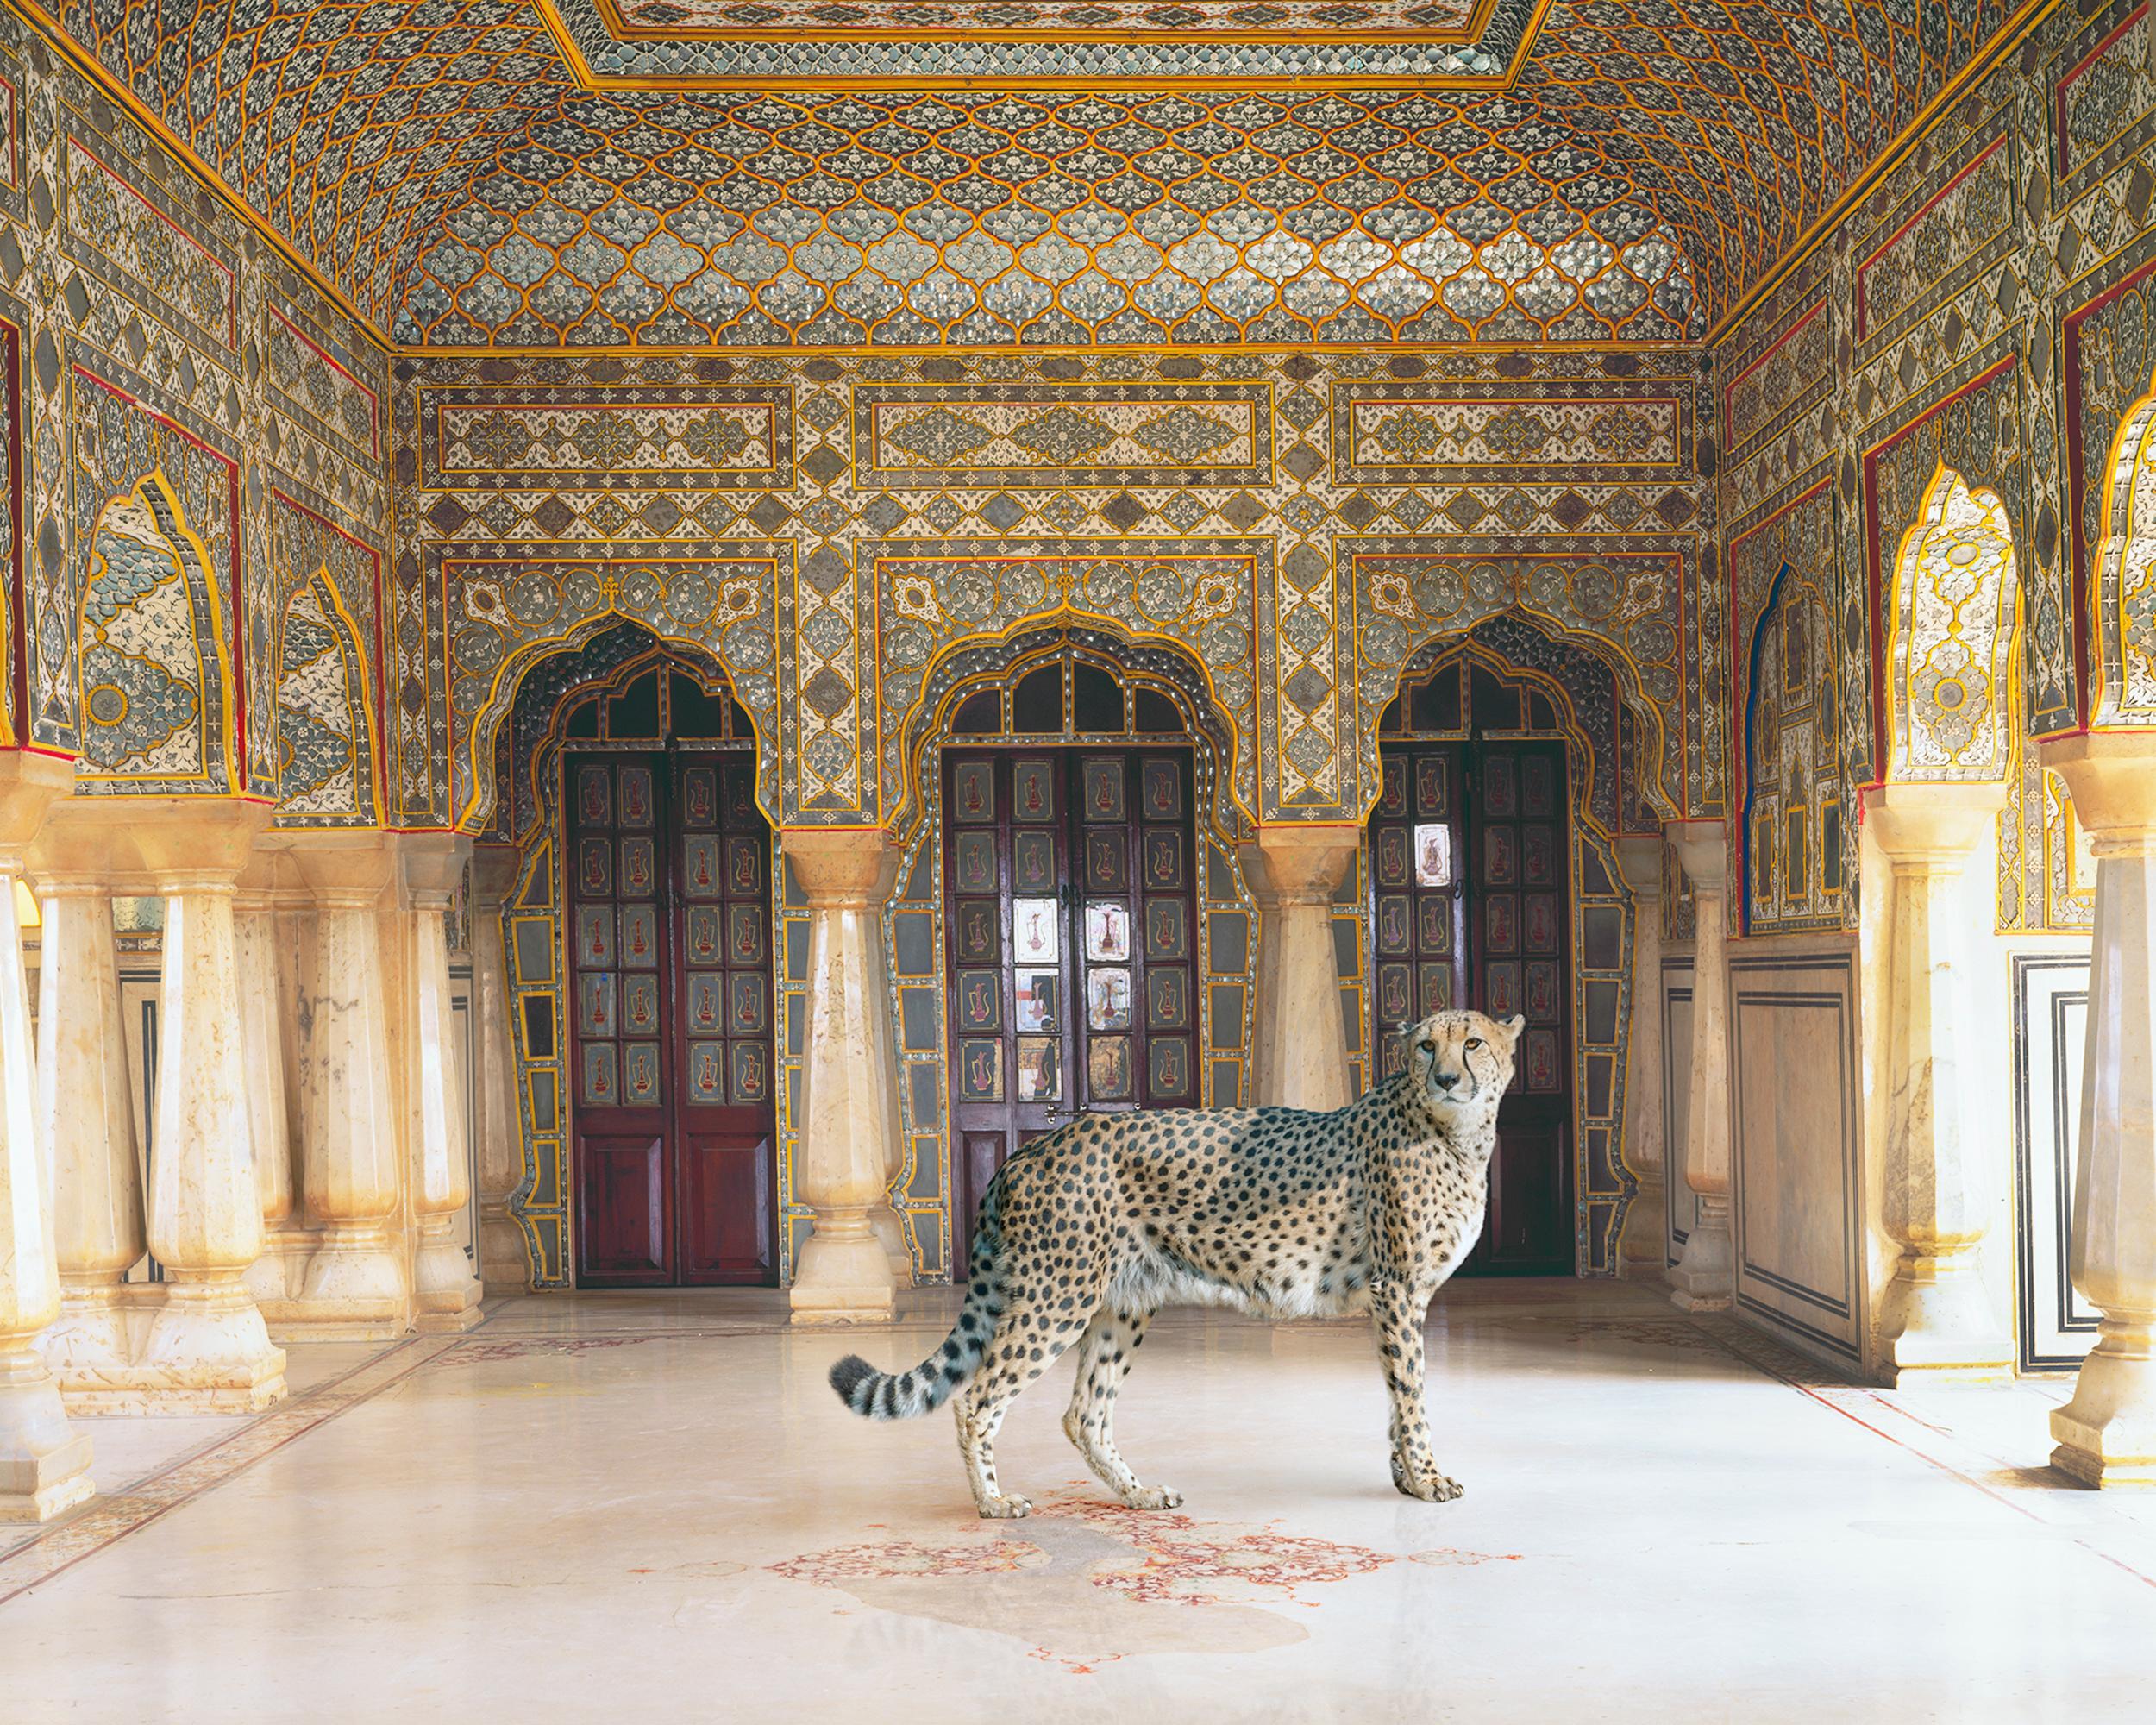 Karen Knorr Animal Print - The Return of the Hunter, Chandra Mahal, Jaipur, 2012